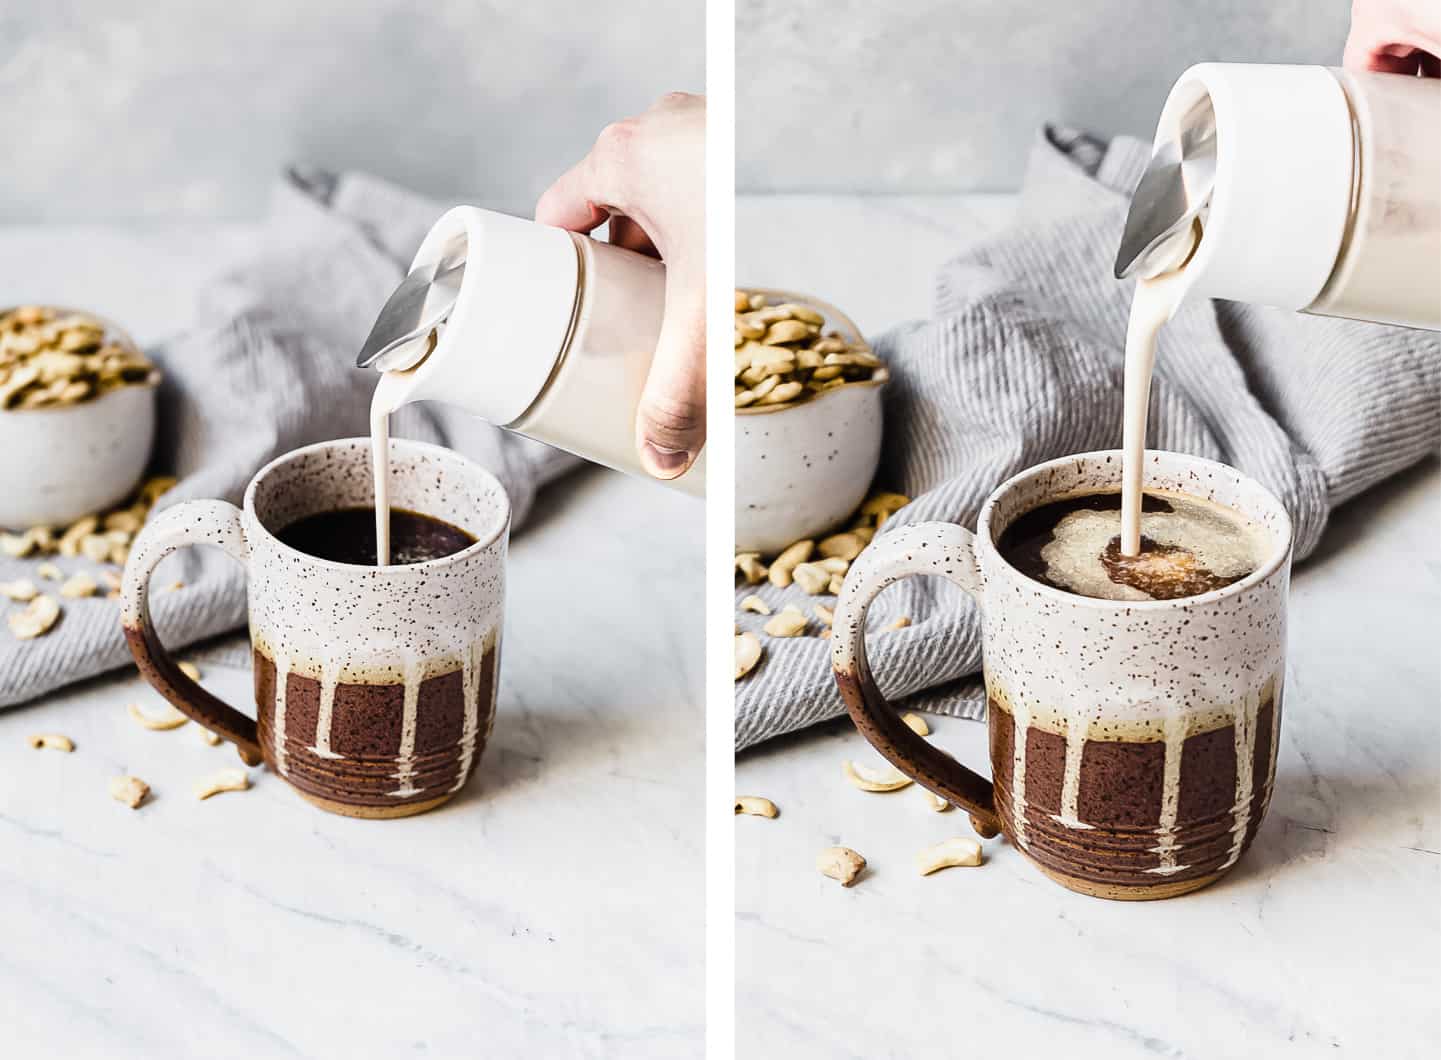 cashew creamer being poured into a coffee mug